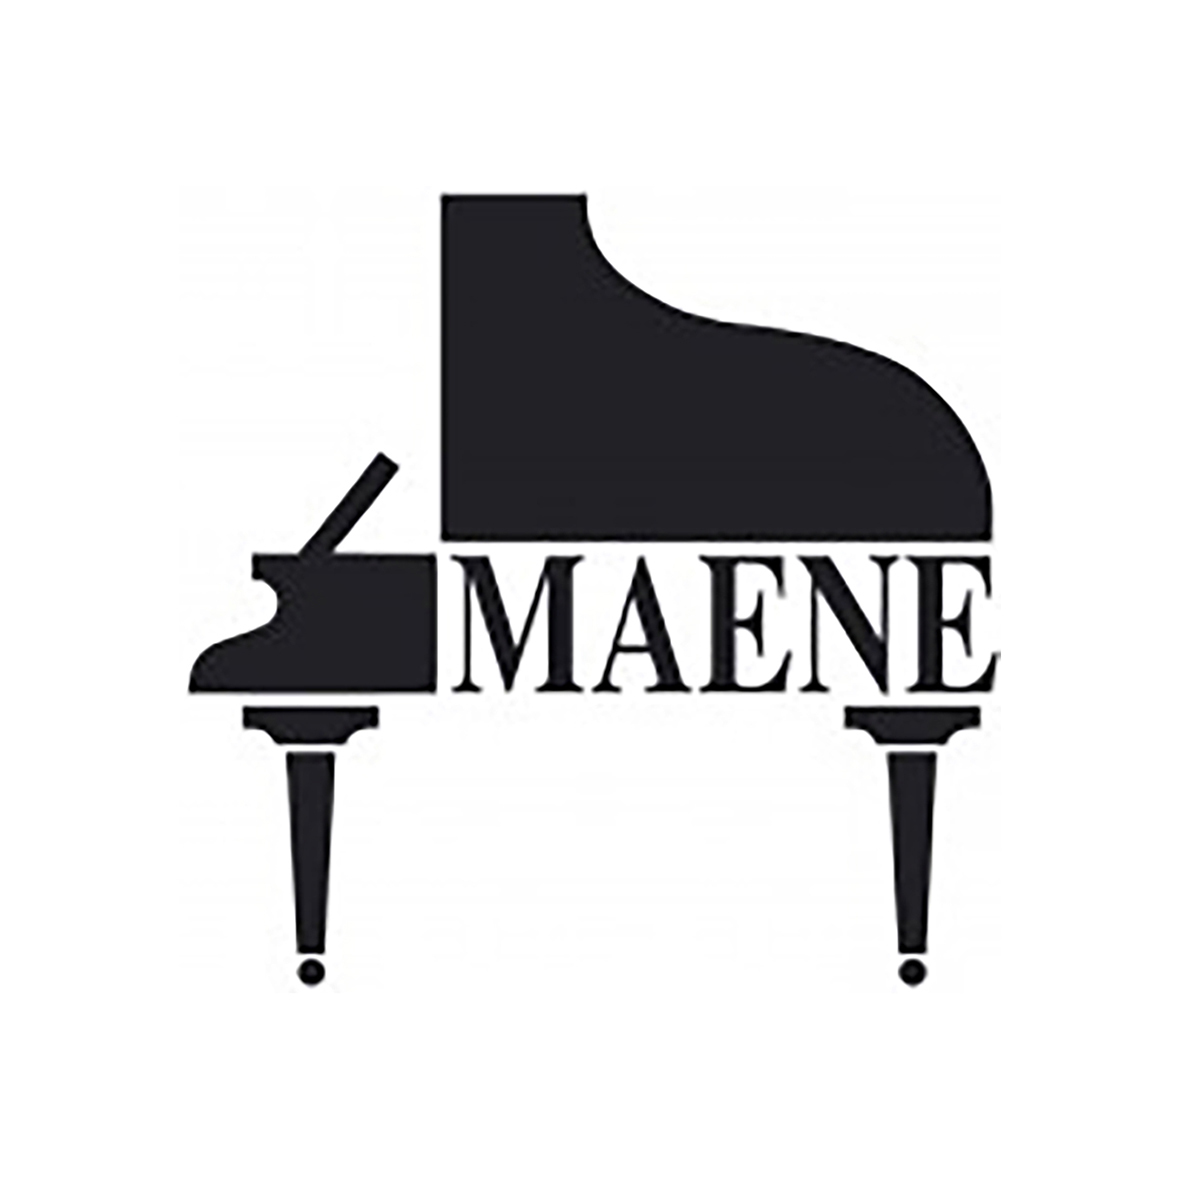 Maene